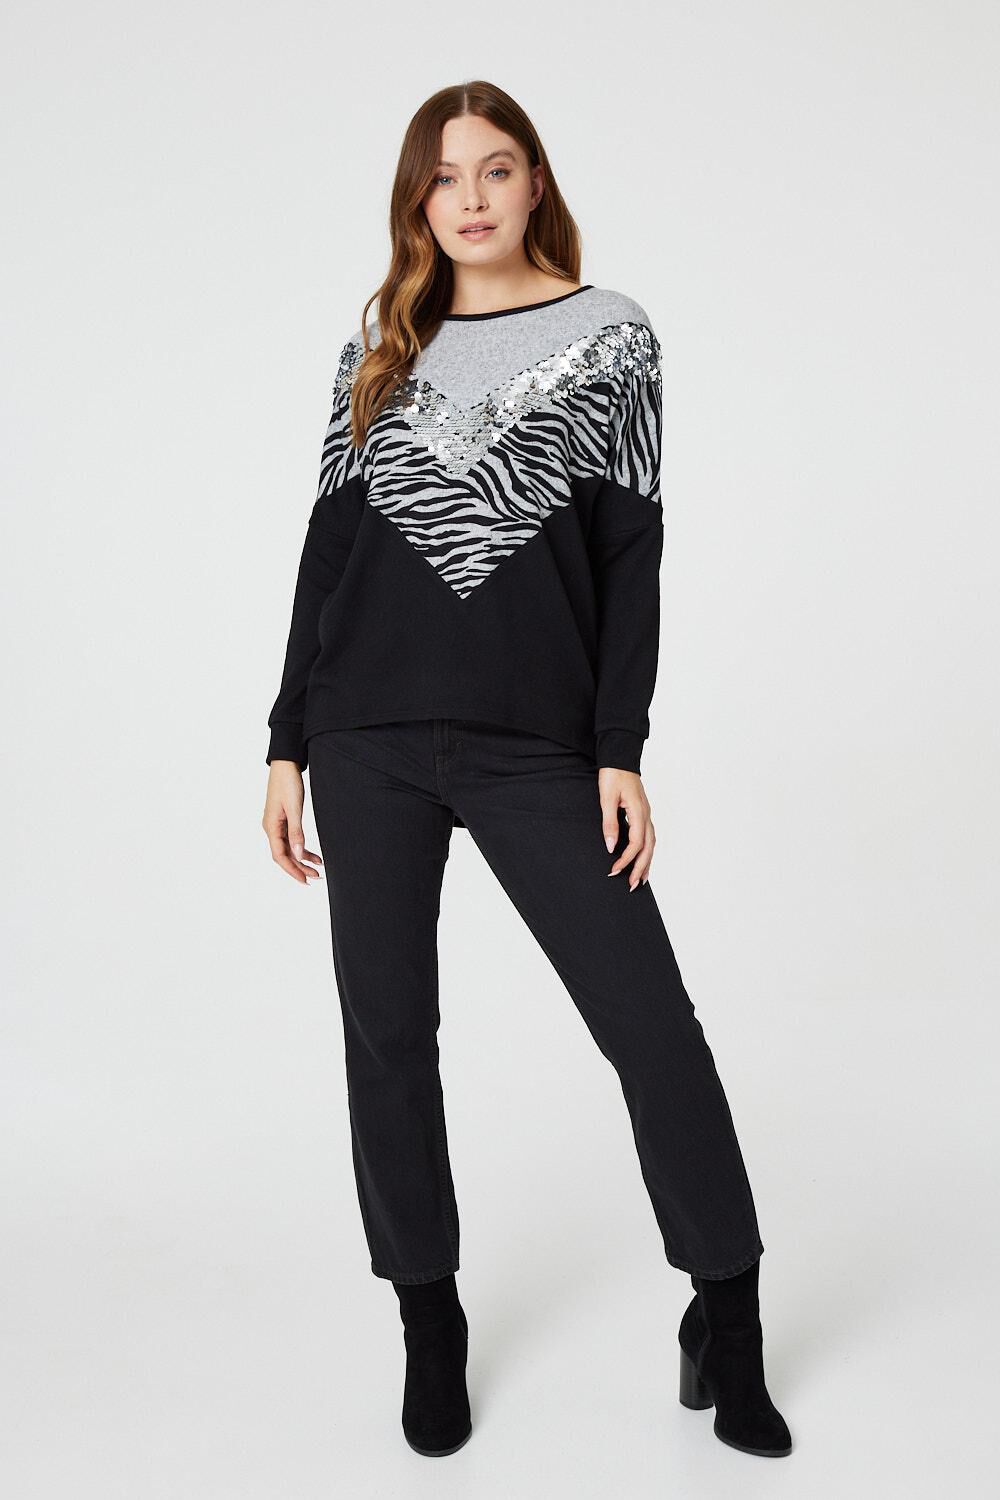 Izabel London Women’s Grey and Black Colour Block Long Sleeve Sequin Zebra Jumper, Size: 14